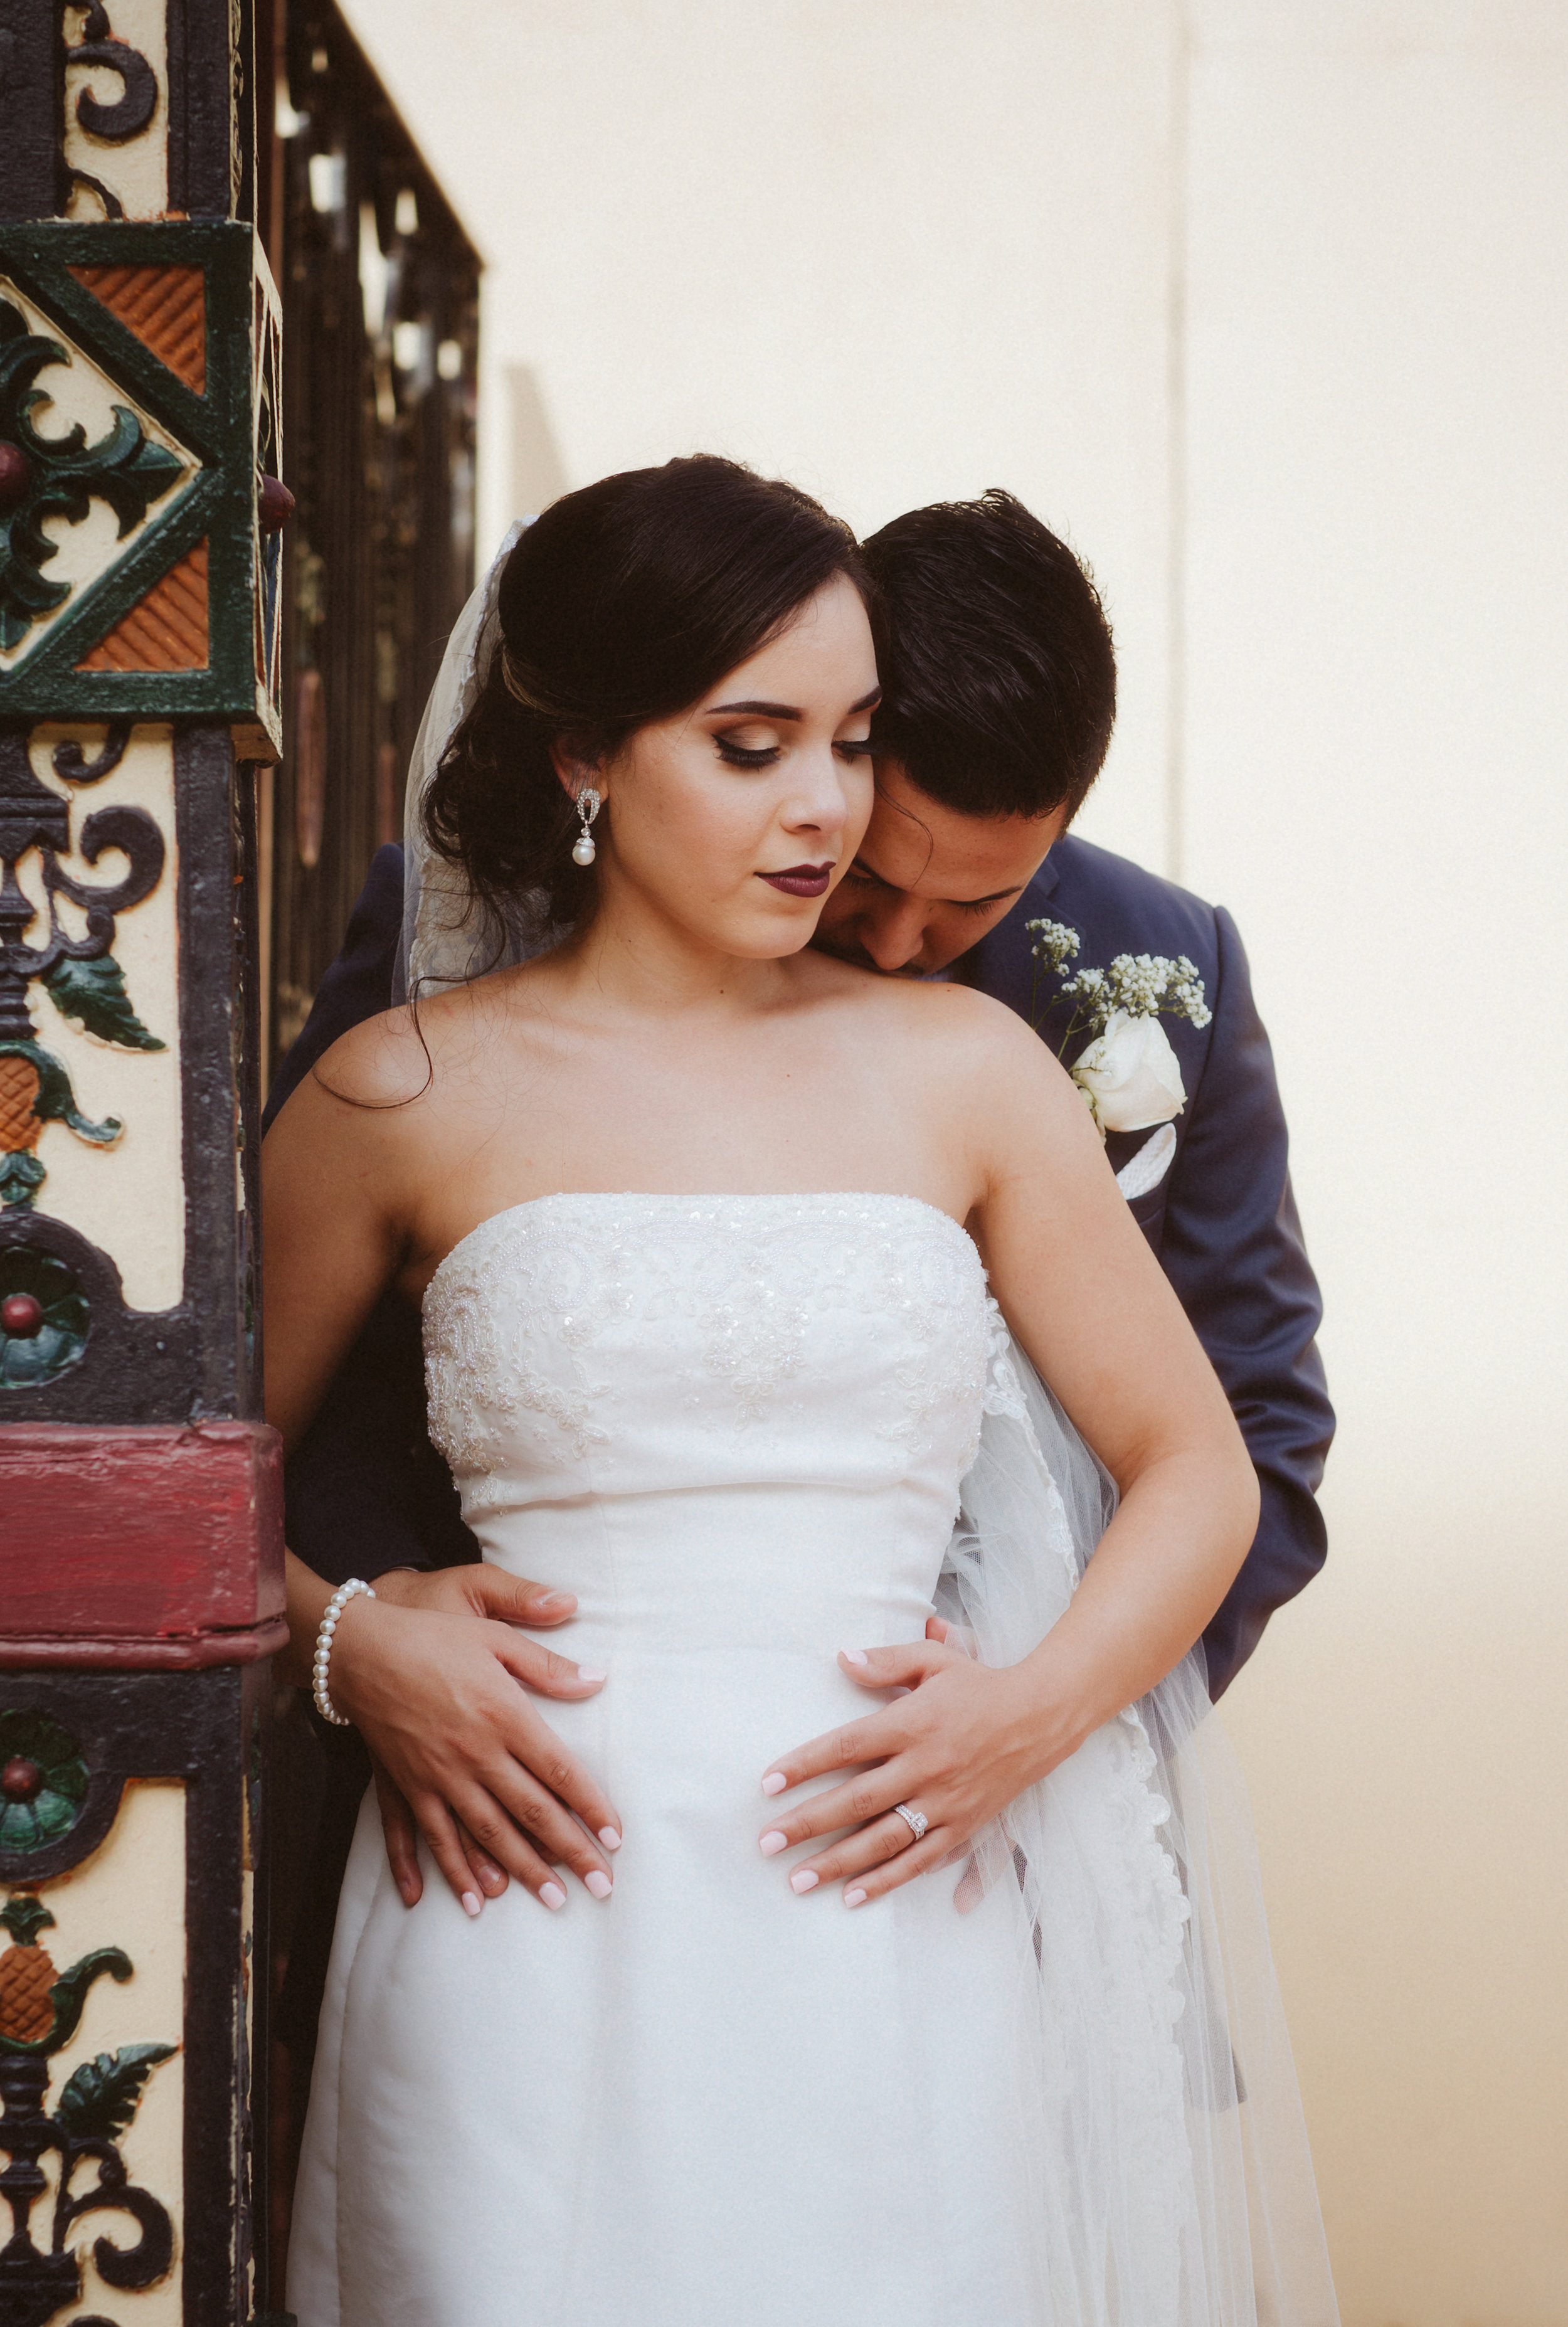 Ceviche Orlando | Wedding Photography | Vanessa Boy | vanessaboy.com |-291.com |final.jpg